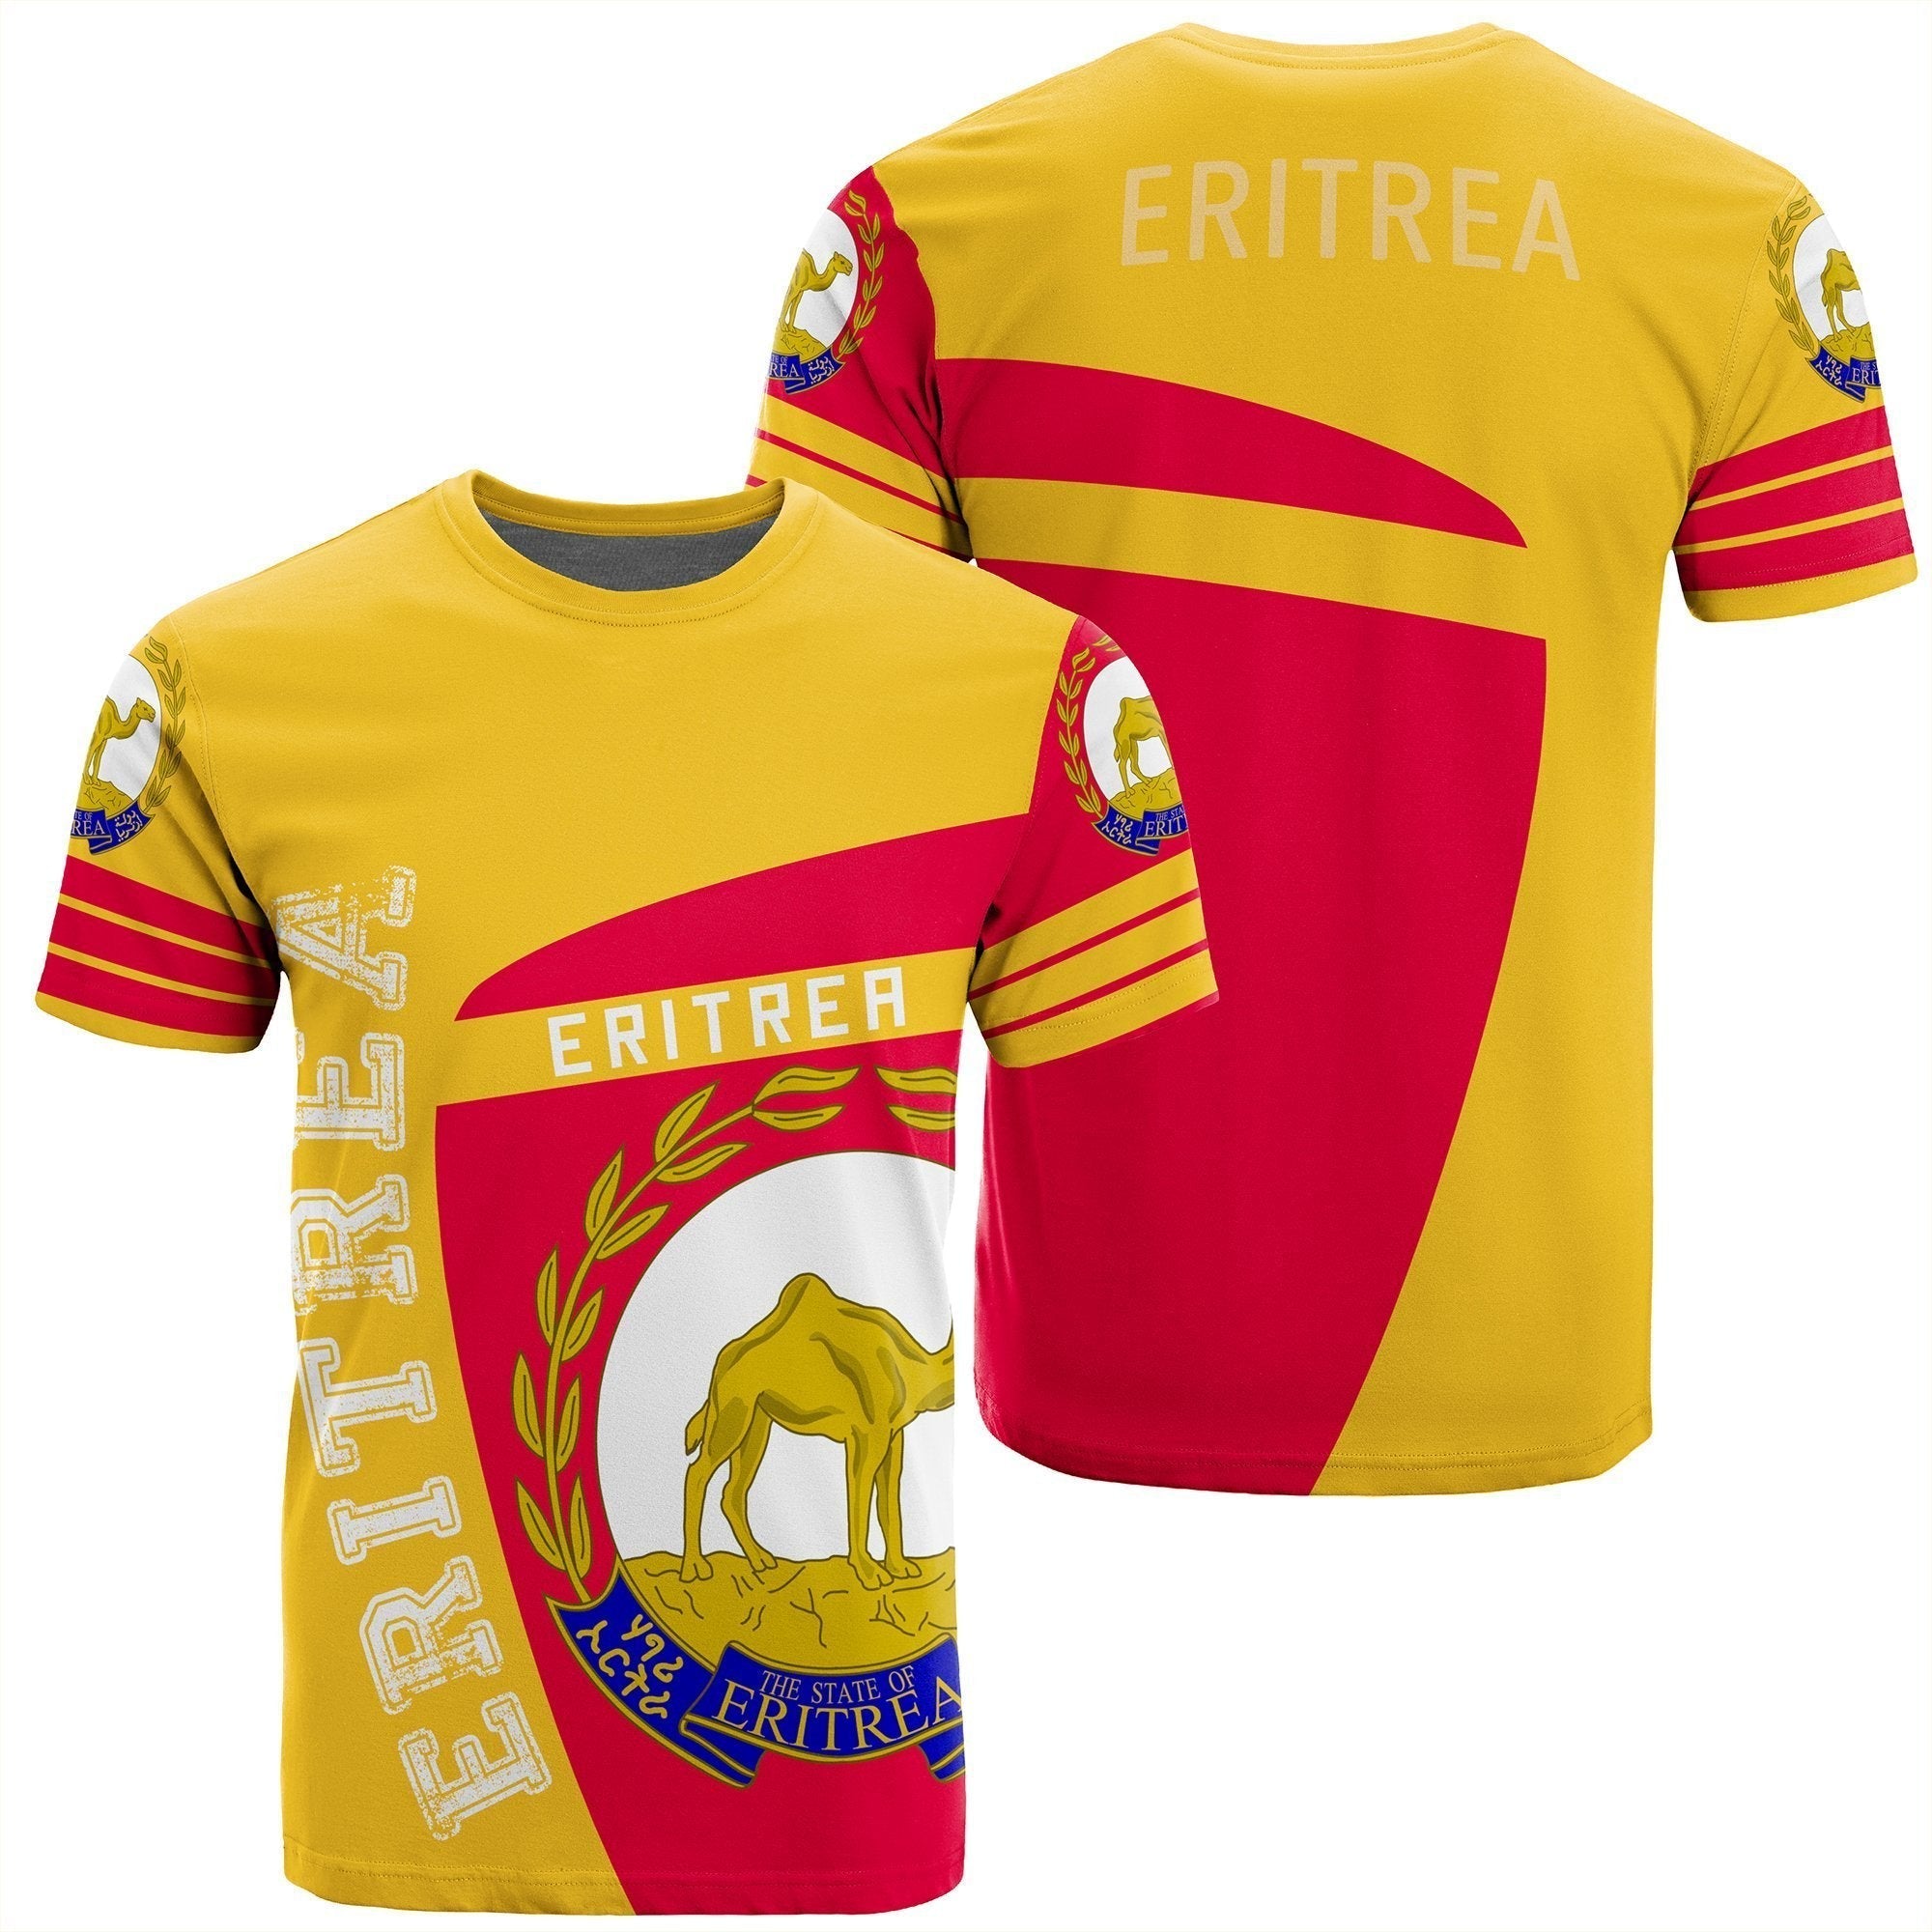 wonder-print-shop-t-shirt-eritrea-african-t-shirt-sport-premium